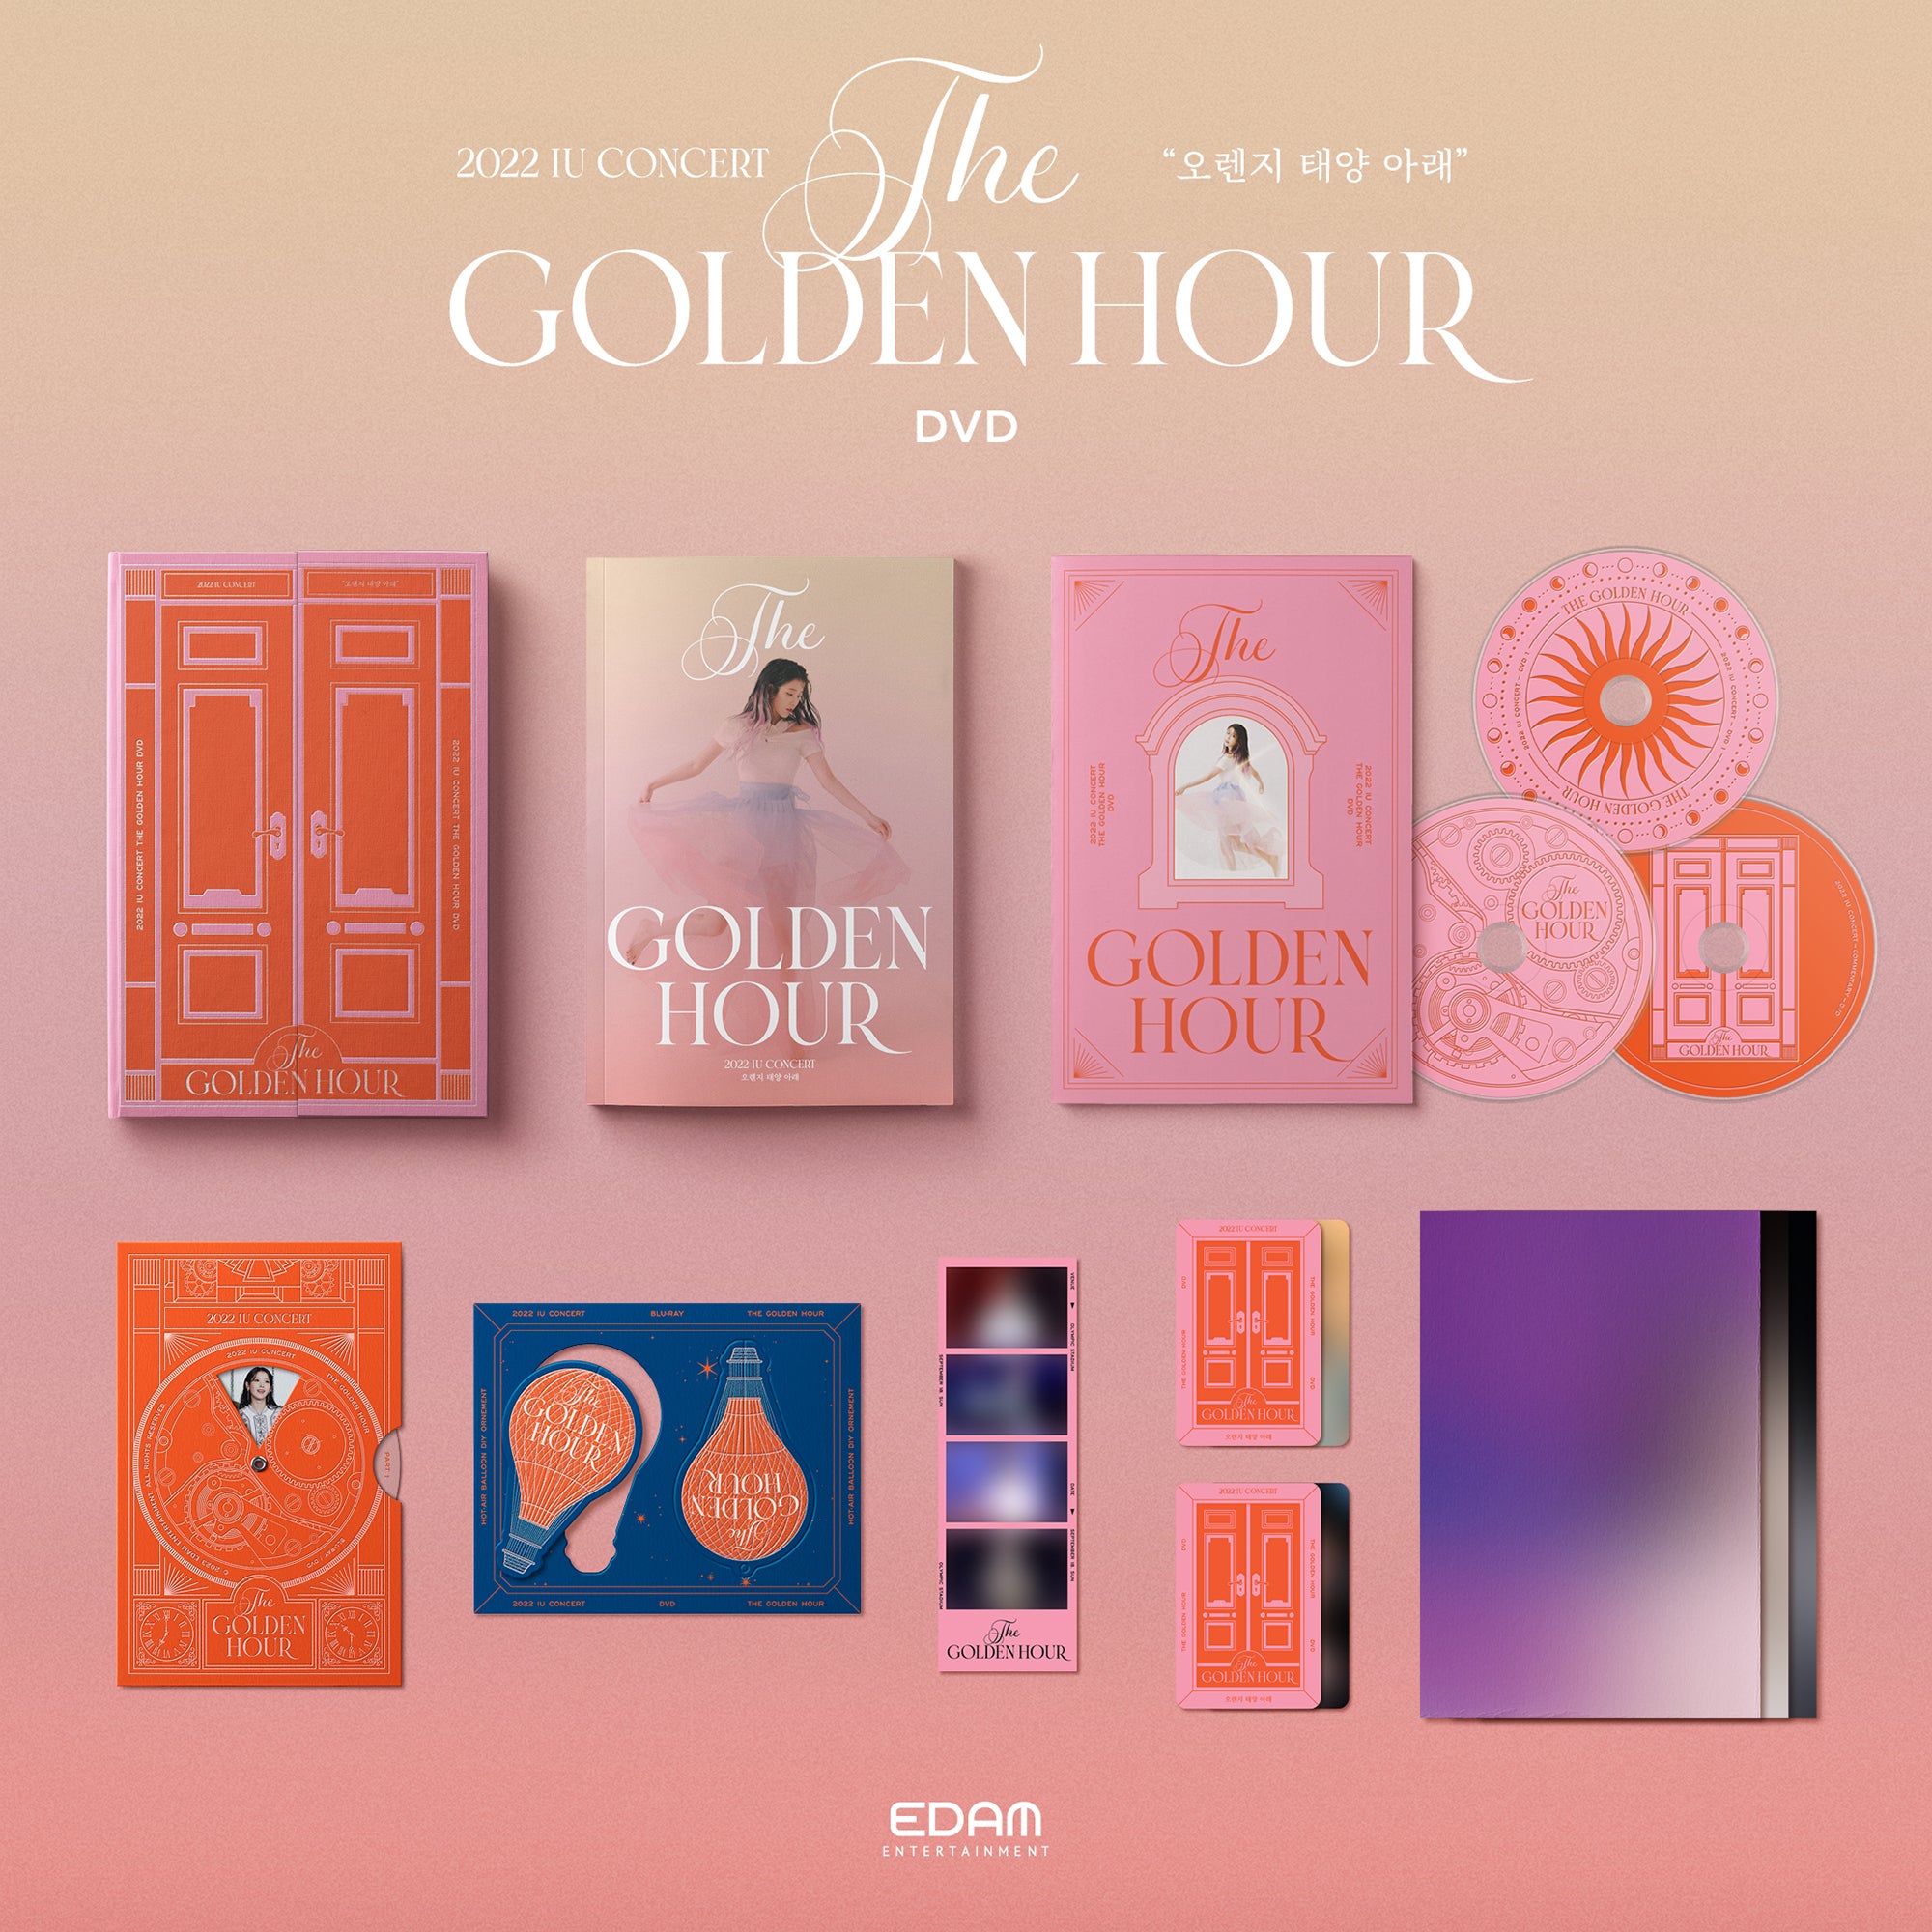 IU 2022 IU Concert 'The Golden Hour Under The Orange Sun' DVD